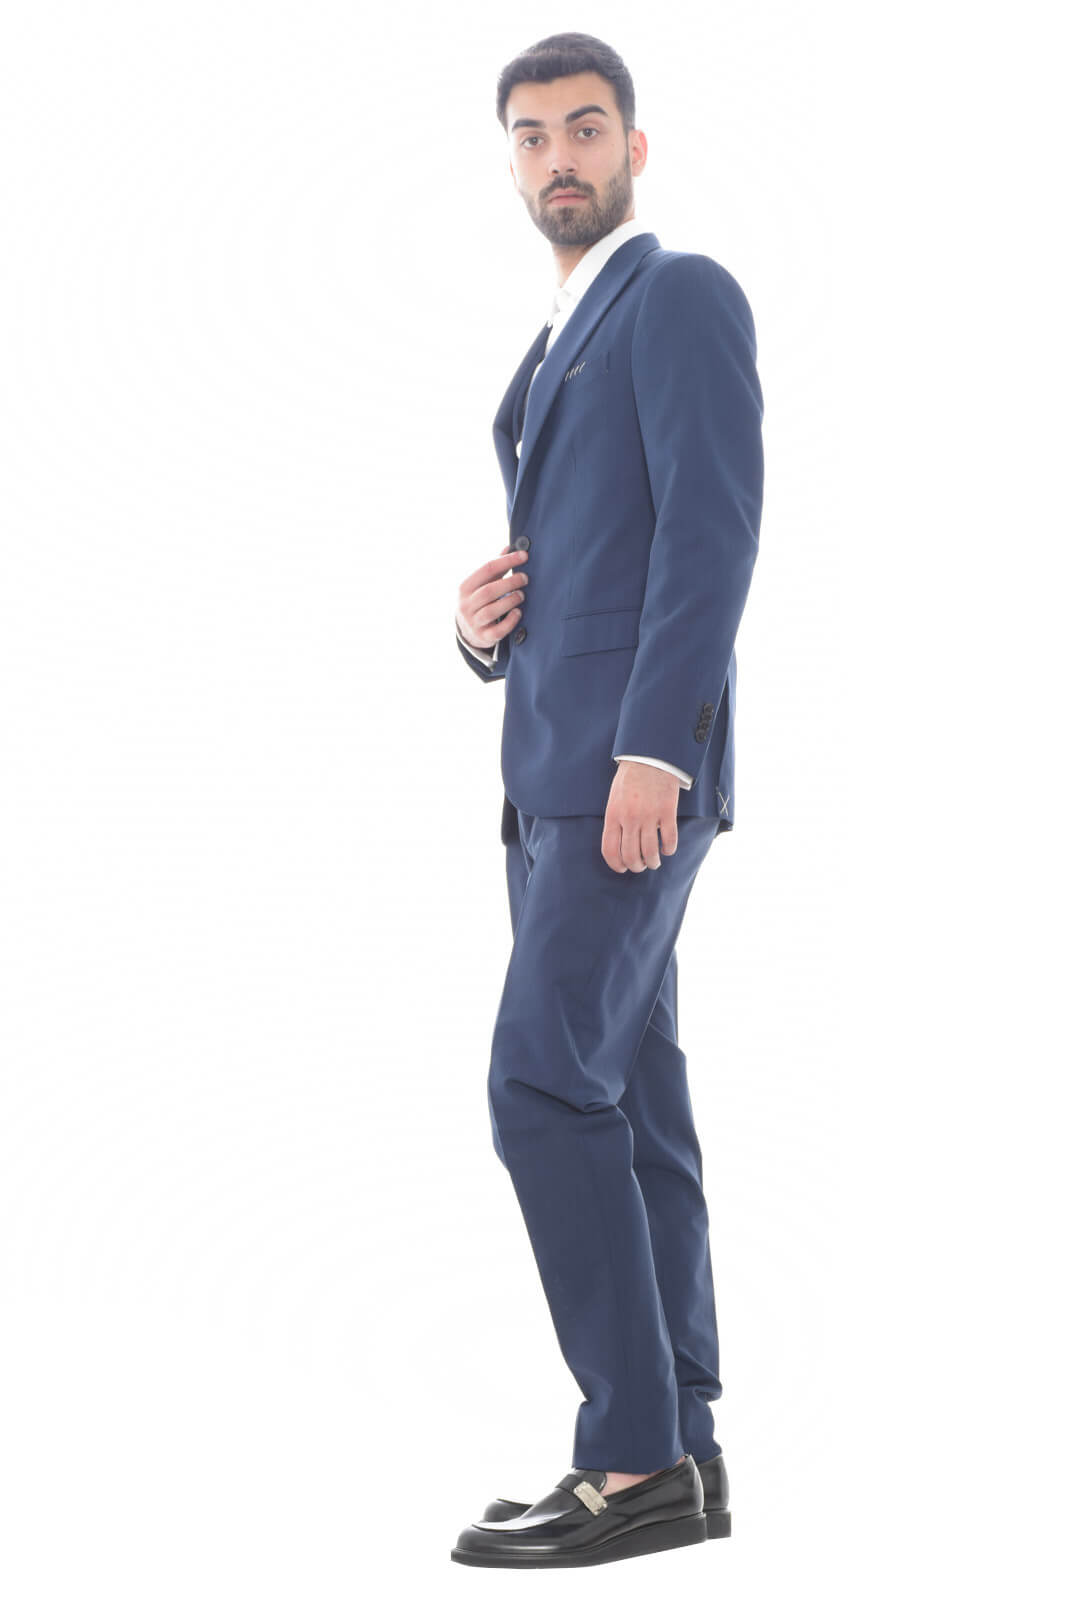 Boglioli Men's suit with waistcoat